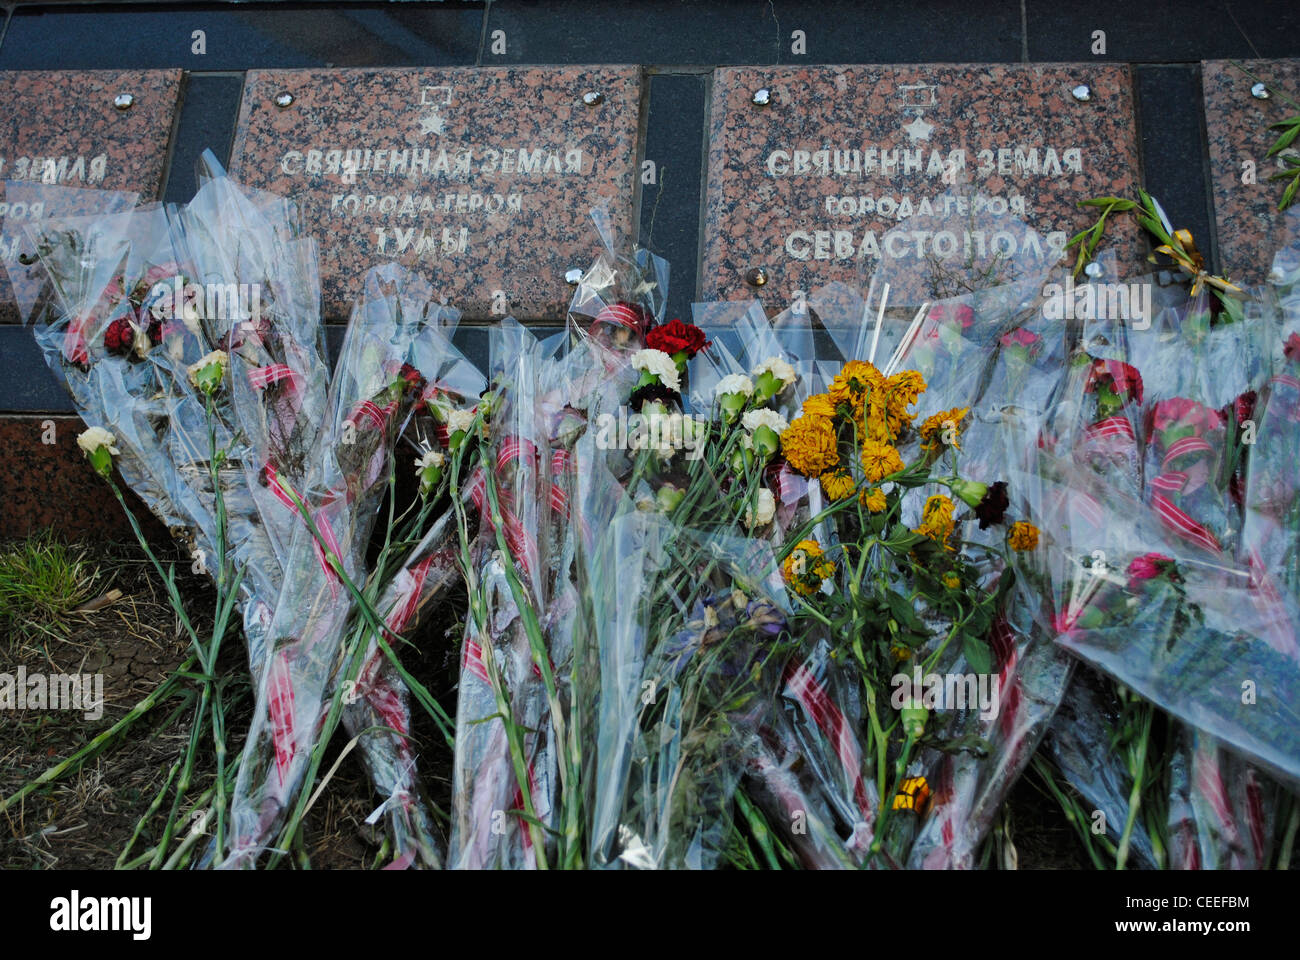 Ukraine. Autonomous Republic of Crimea. Feodosiya. Memorial to Victims of World War II. Floral offerings. Stock Photo